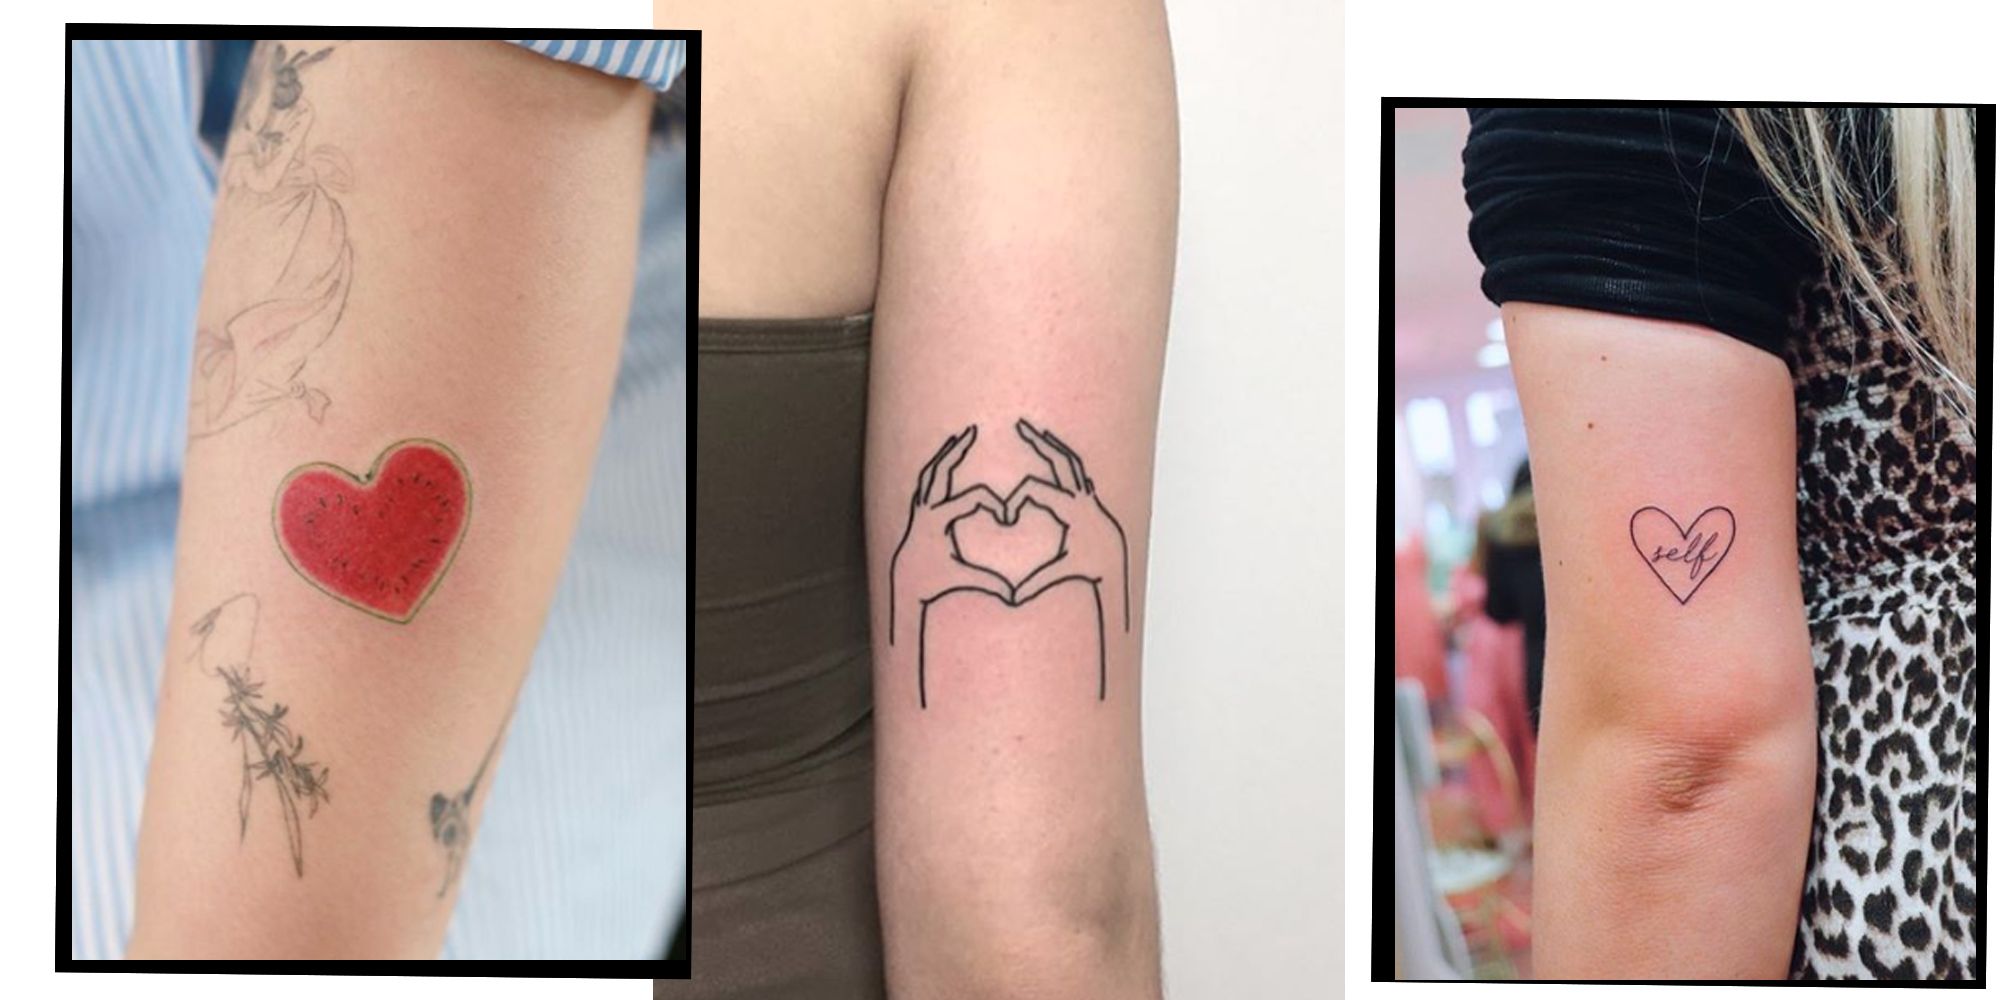 Tiny Heart Tattoos You Won't Regret